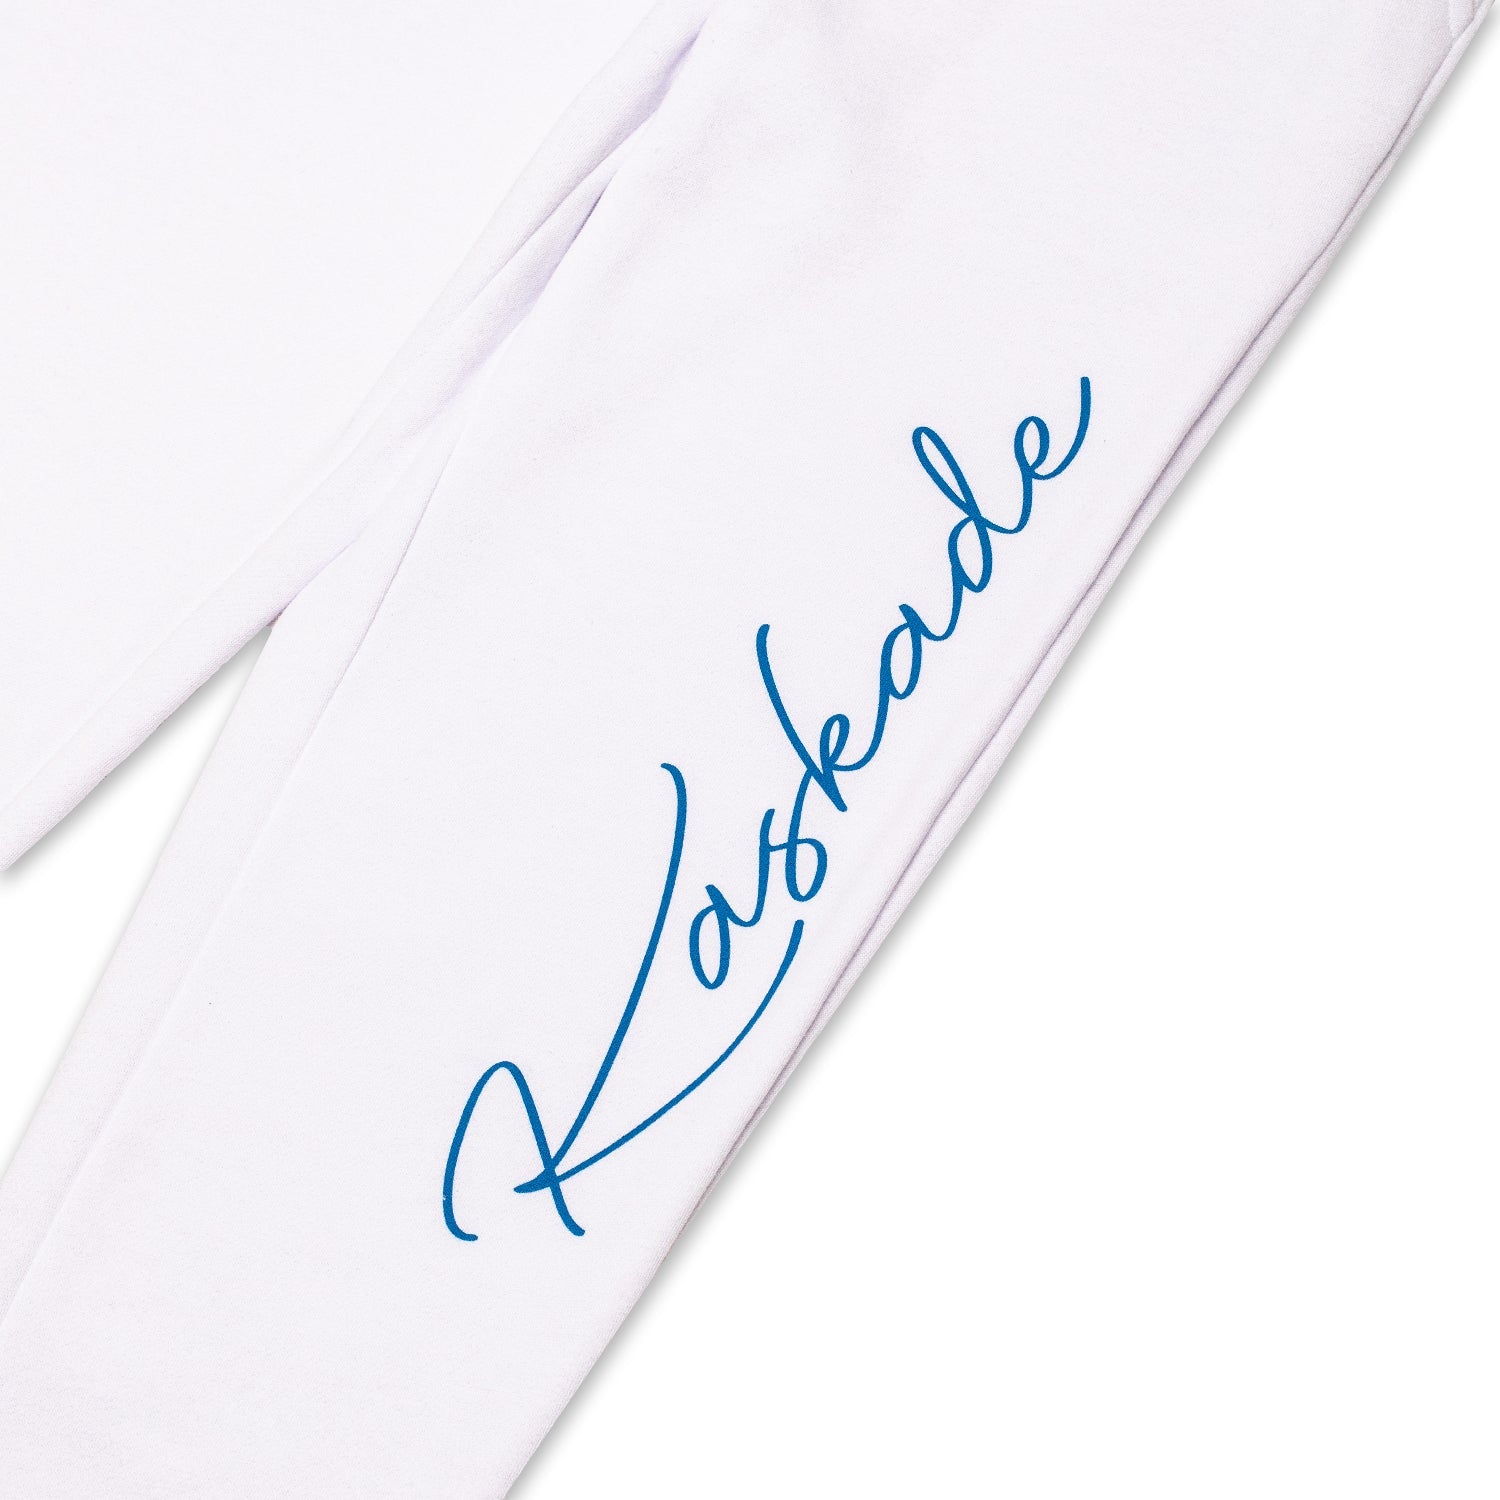 White Sweatpants - Sweatpants -  Kaskade-  Electric Family Official Artist Merchandise